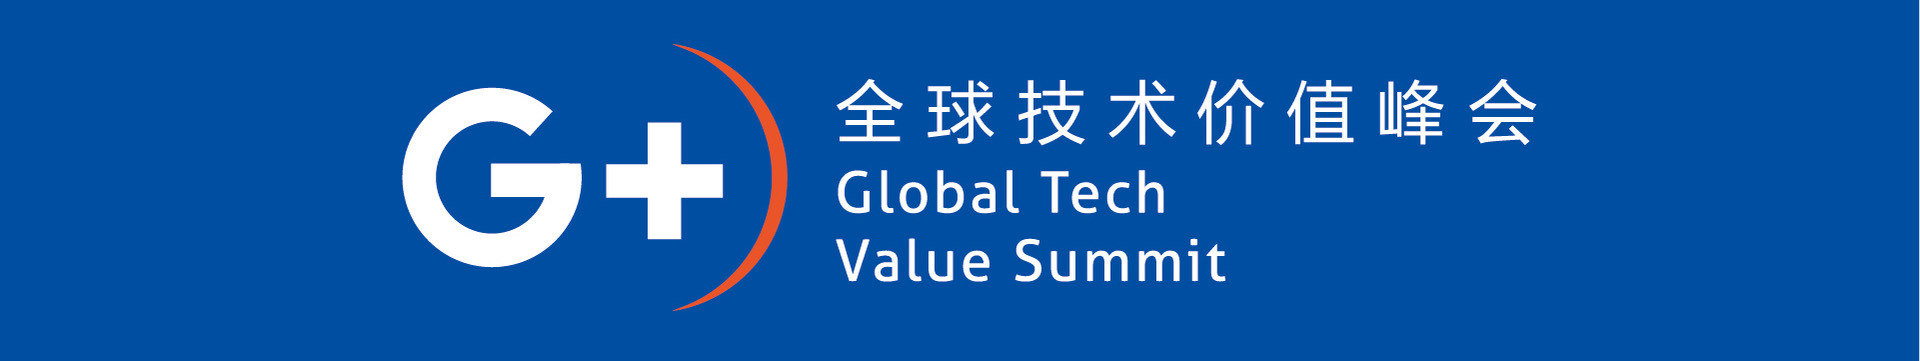 G+全球技术价值峰会